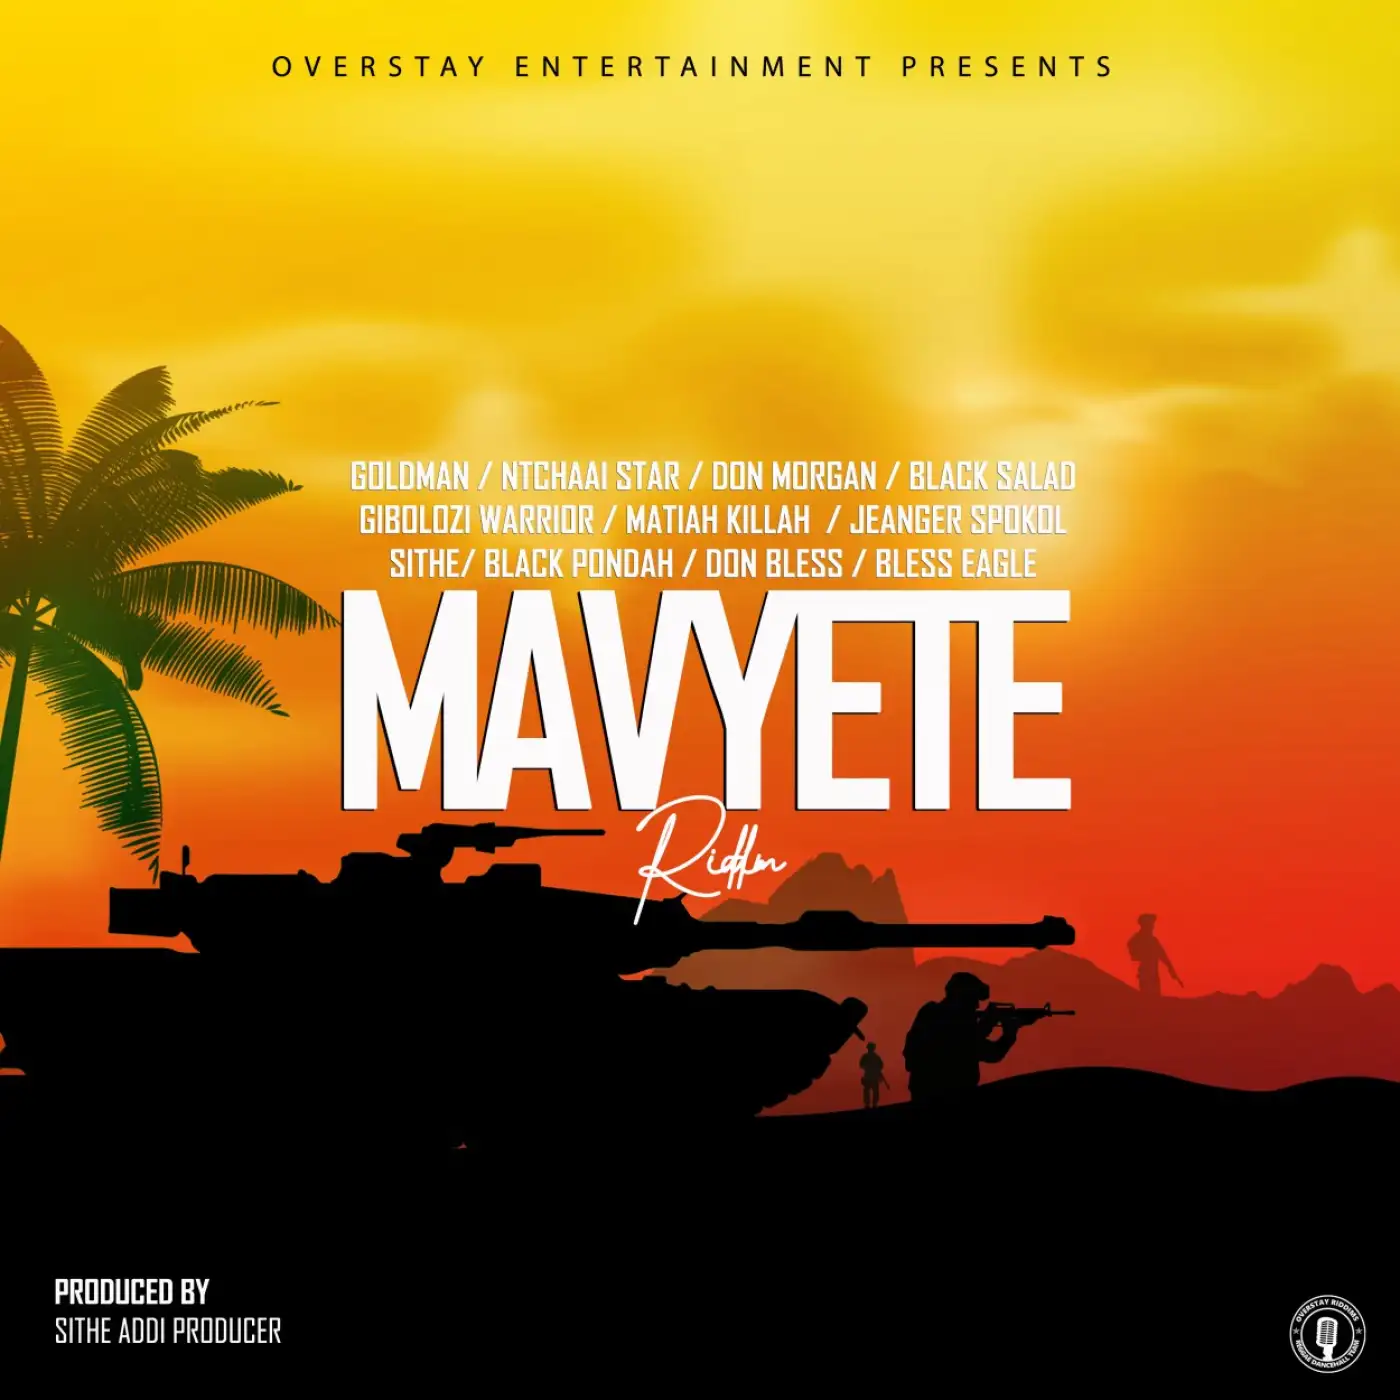 Overstay Team-Overstay Team - Mavyete Riddim Medley ft Various Artists (Prod. Sithe Adi Producer)-song artwork cover